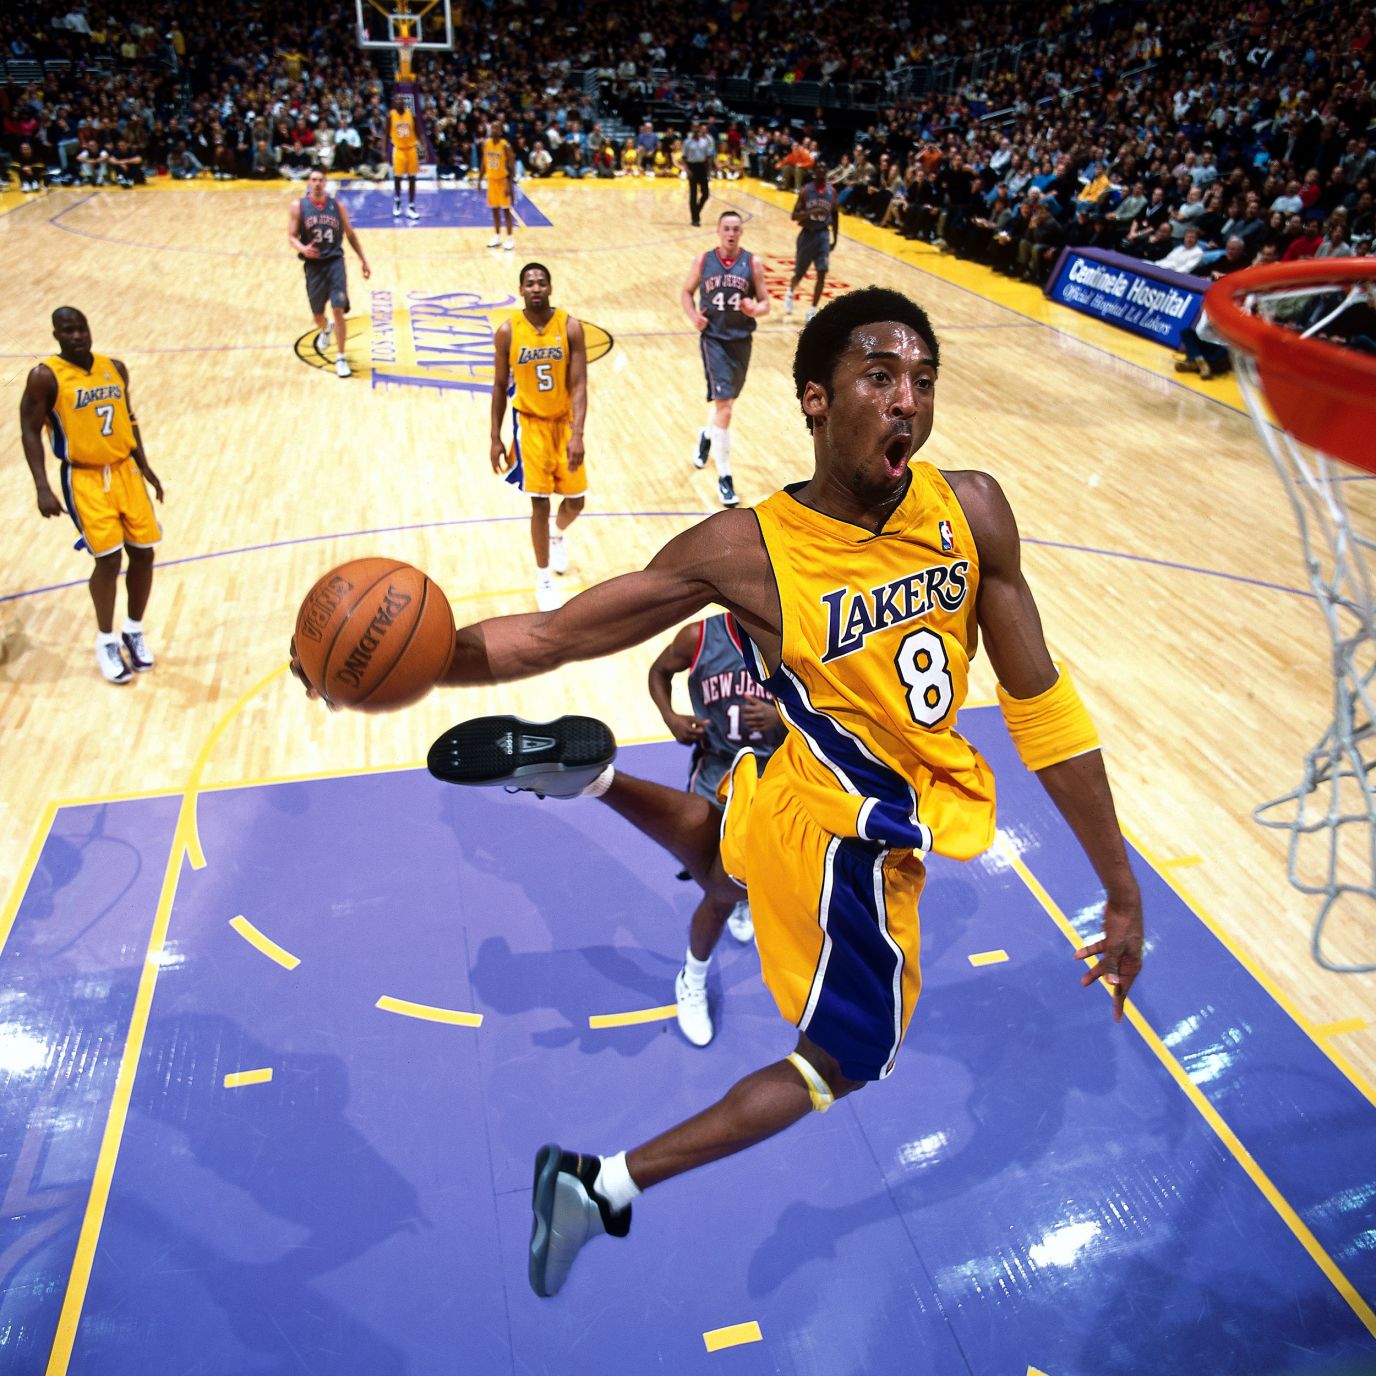 Kobe Bryant dunking in an NBA game